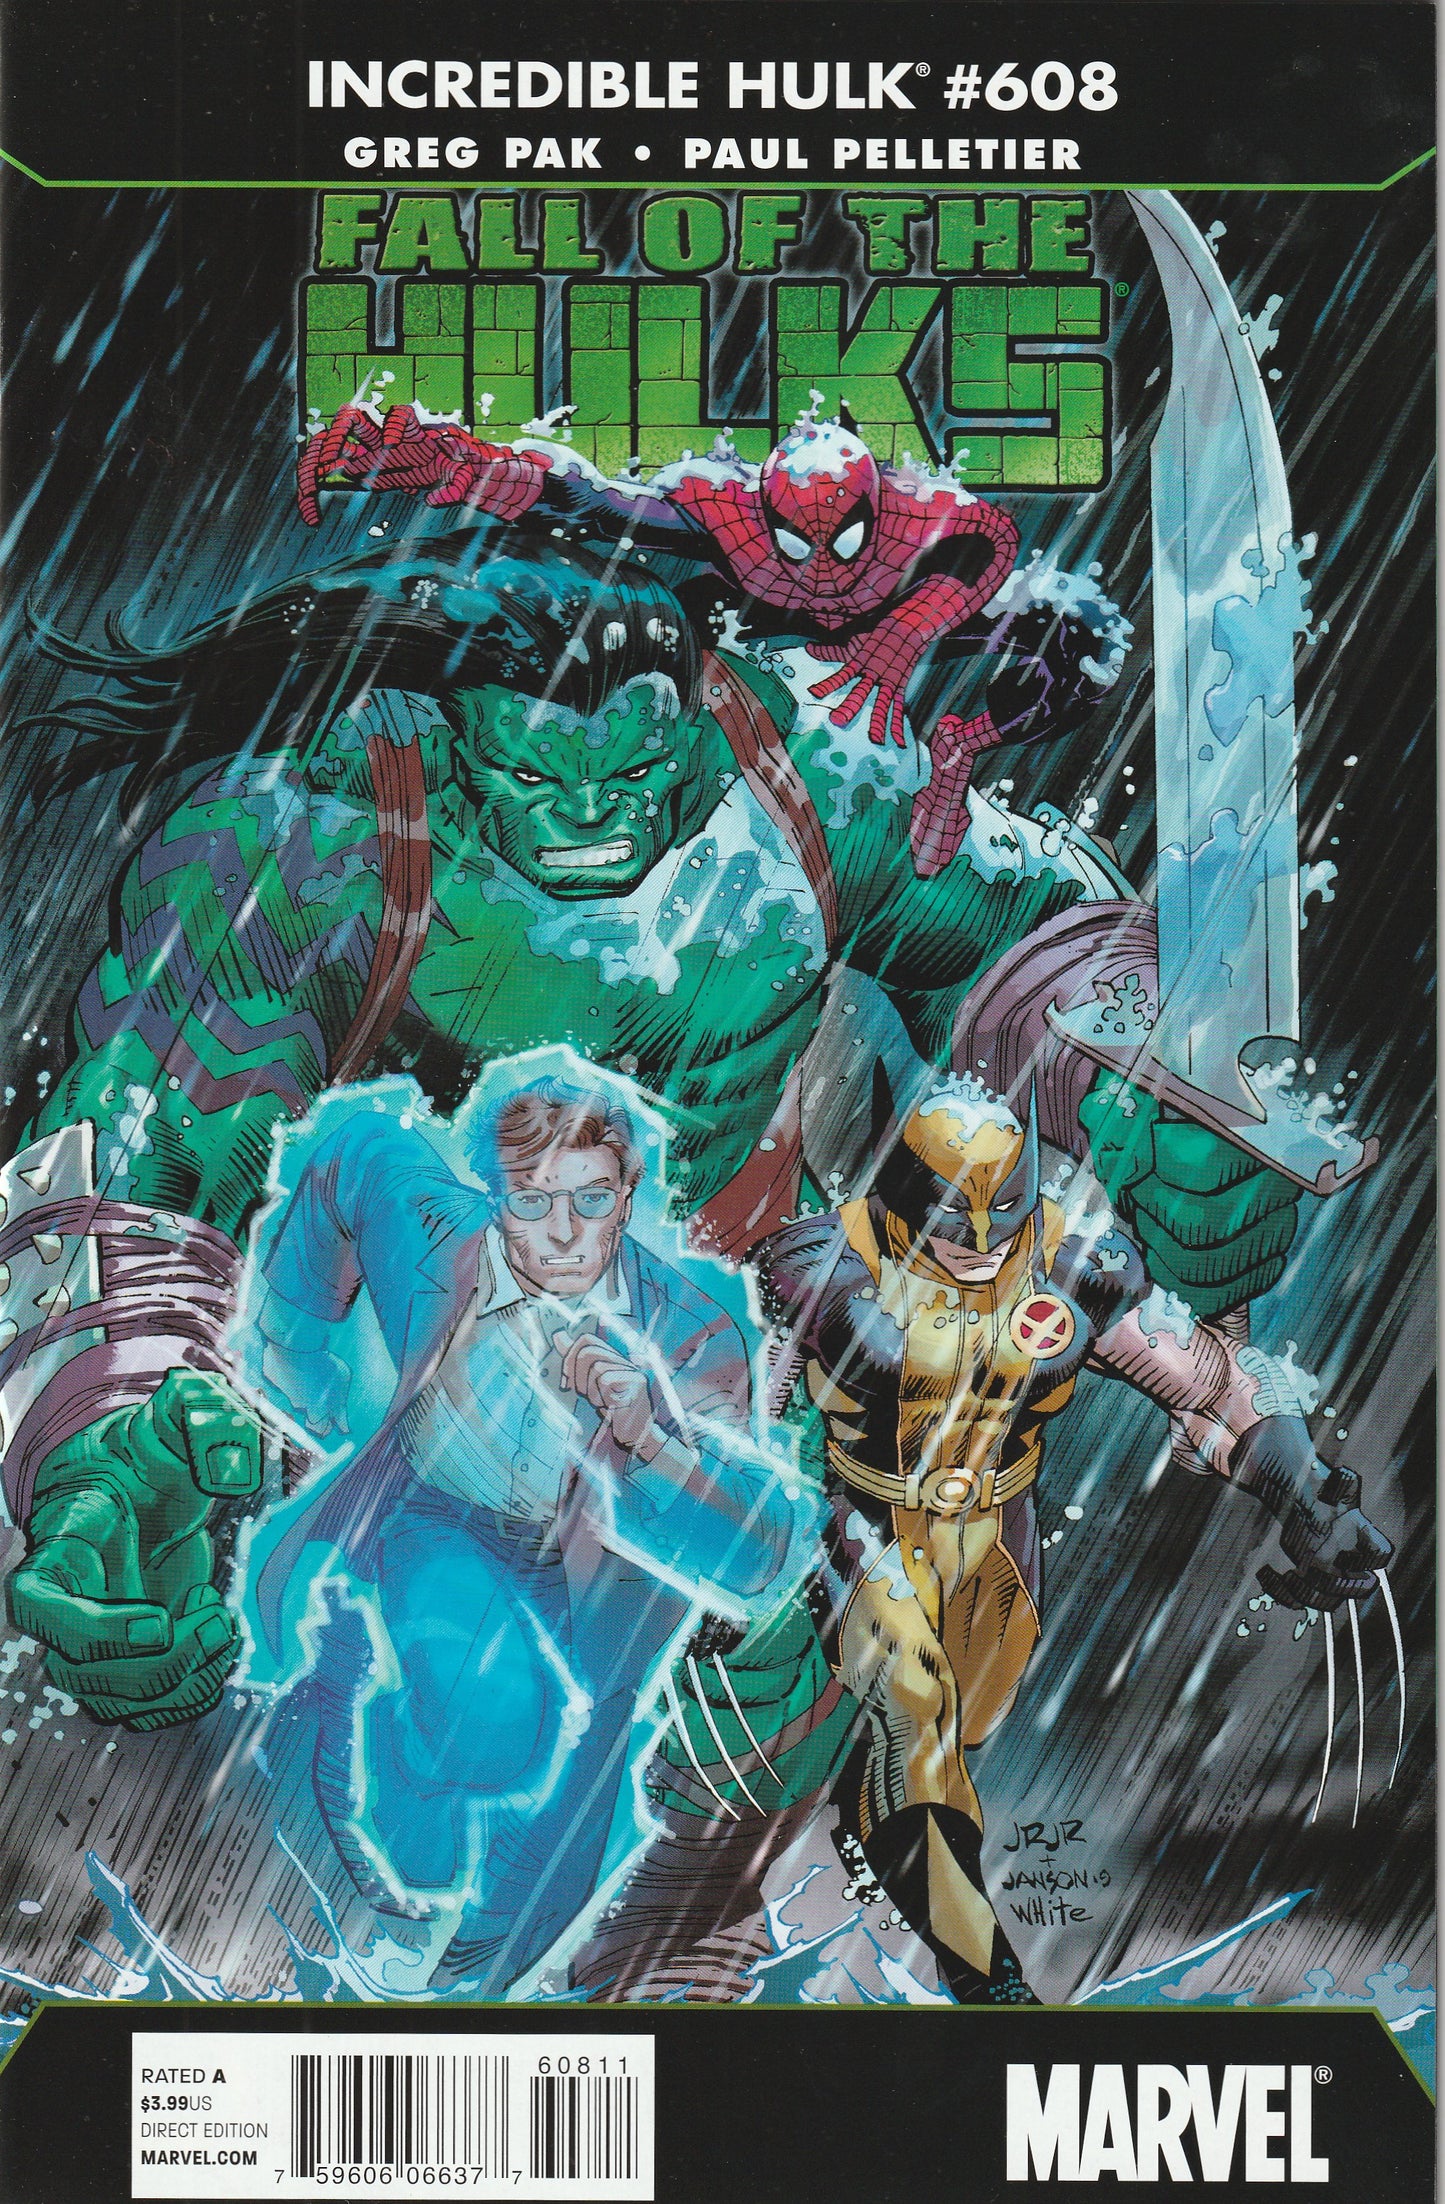 Incredible Hulk #608 (2010) - Fall of the Hulks tie-in